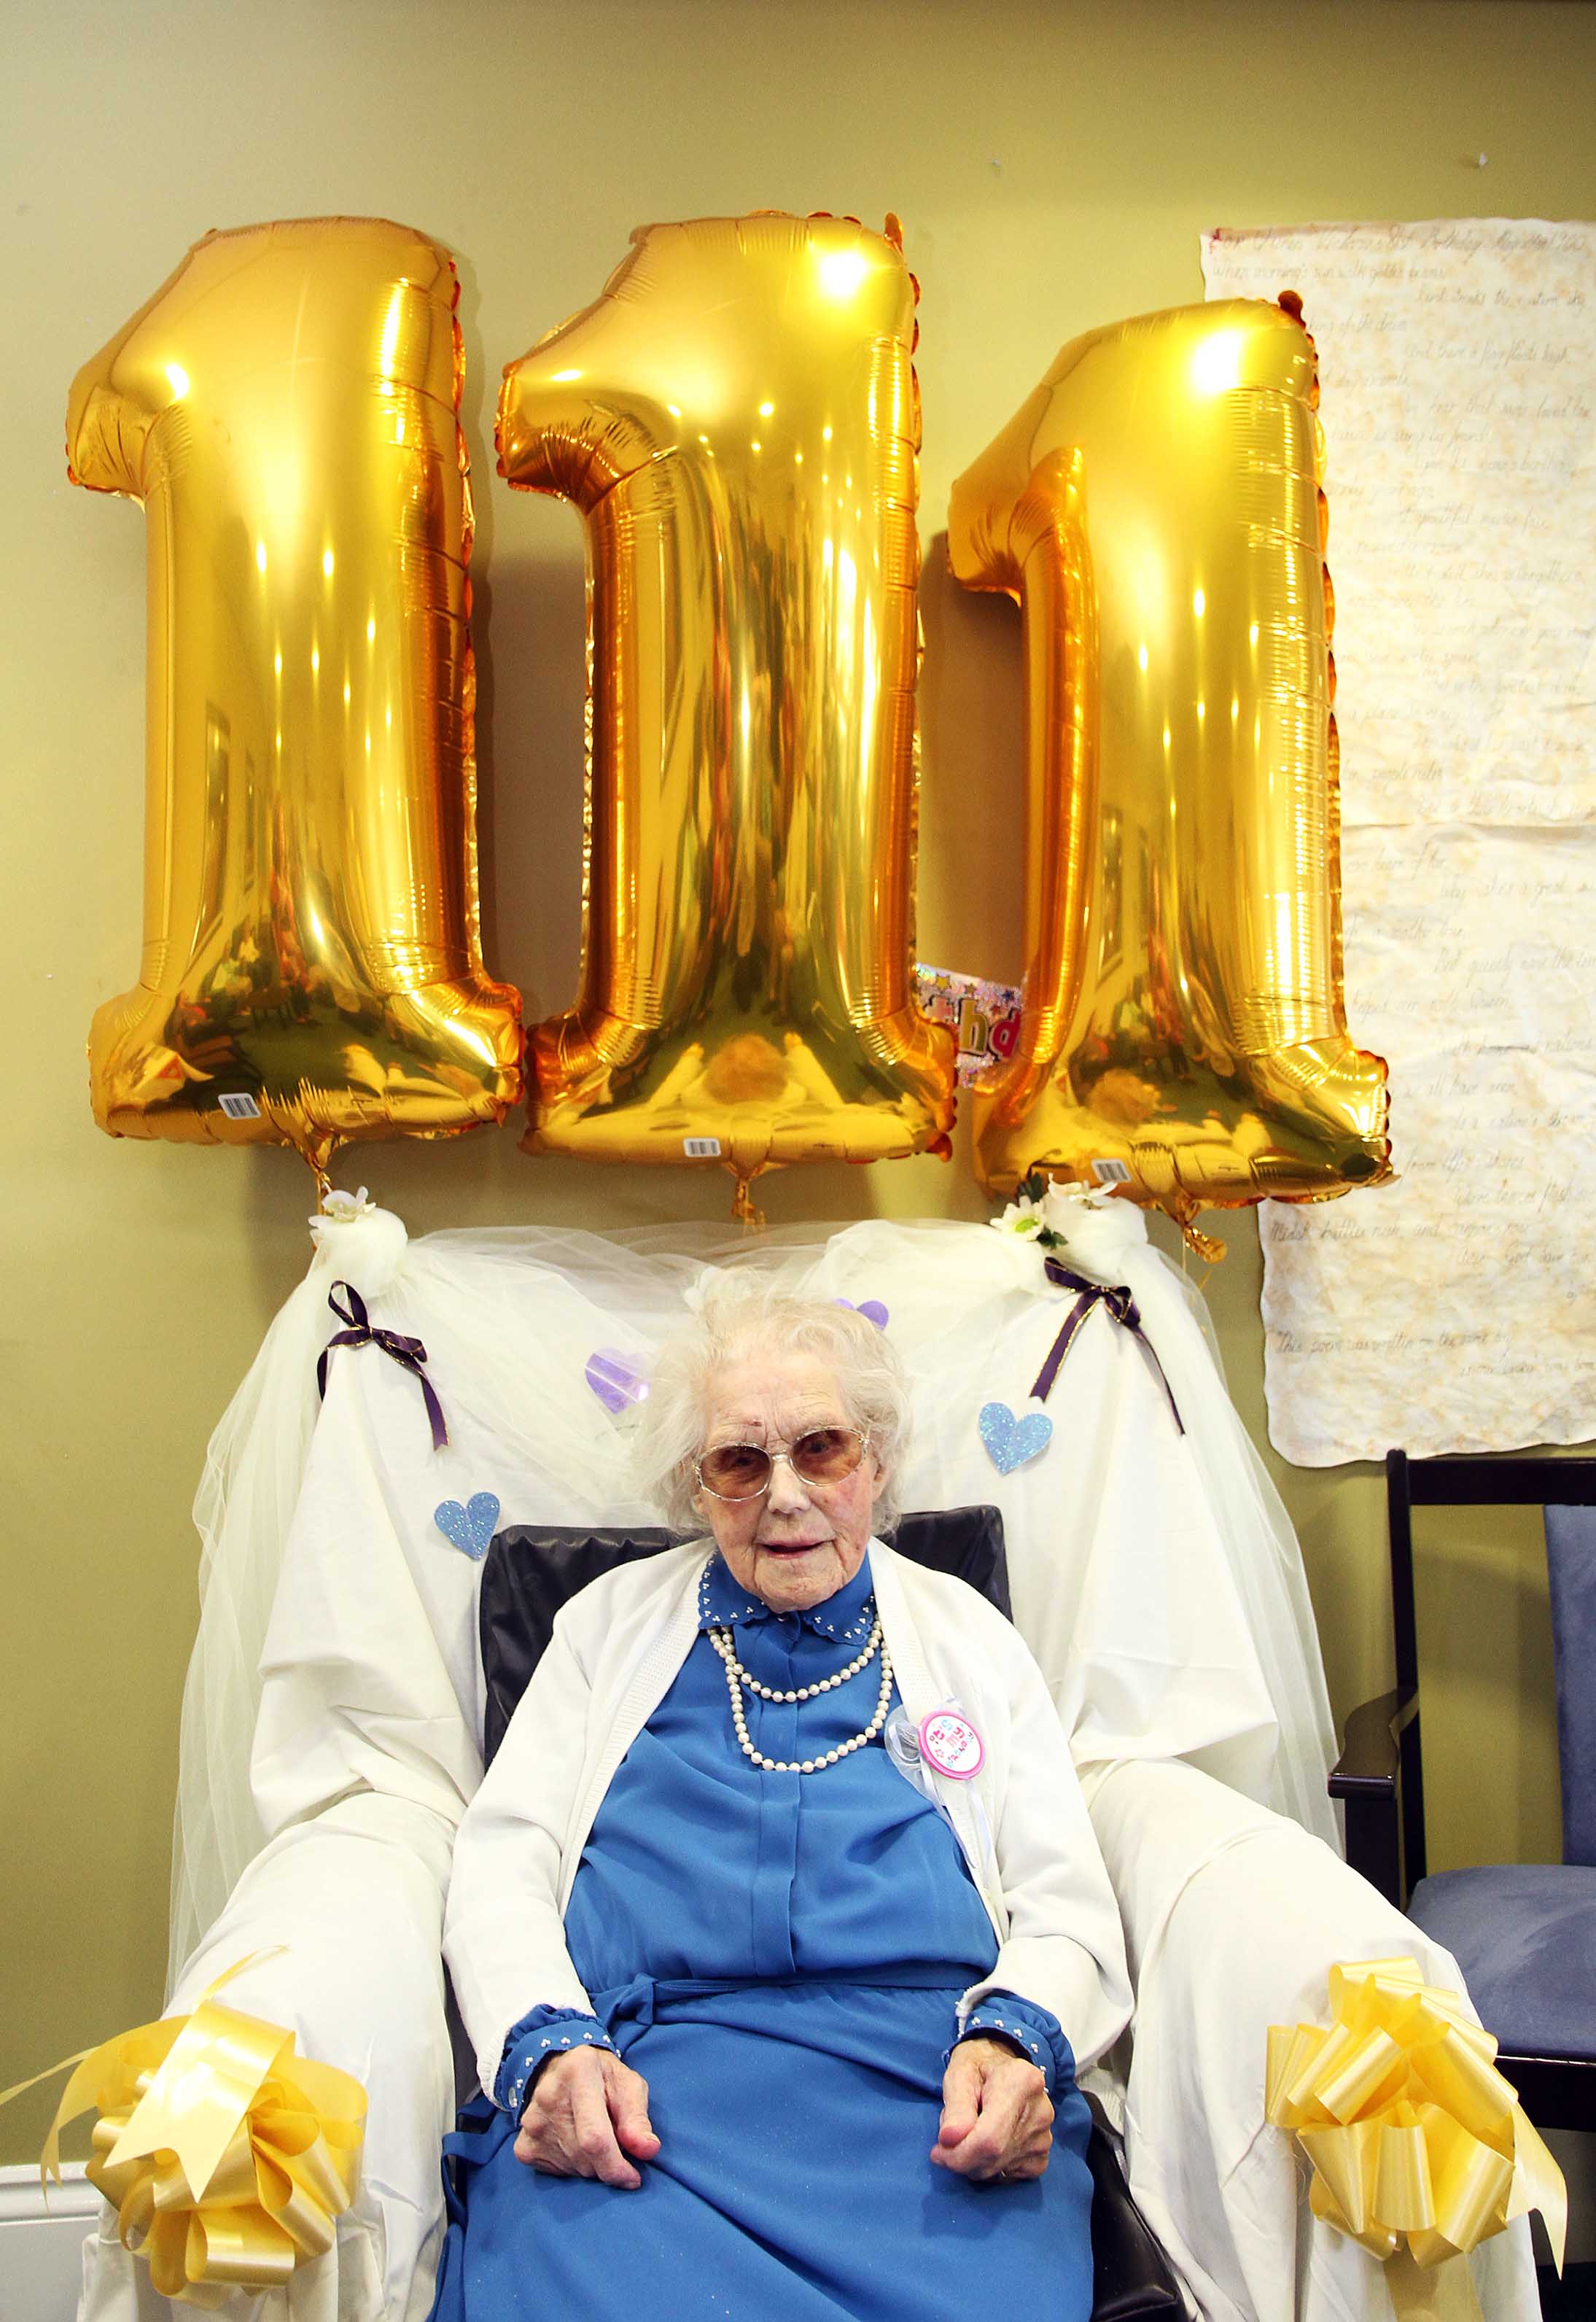 111-year-old women celebrates birthday